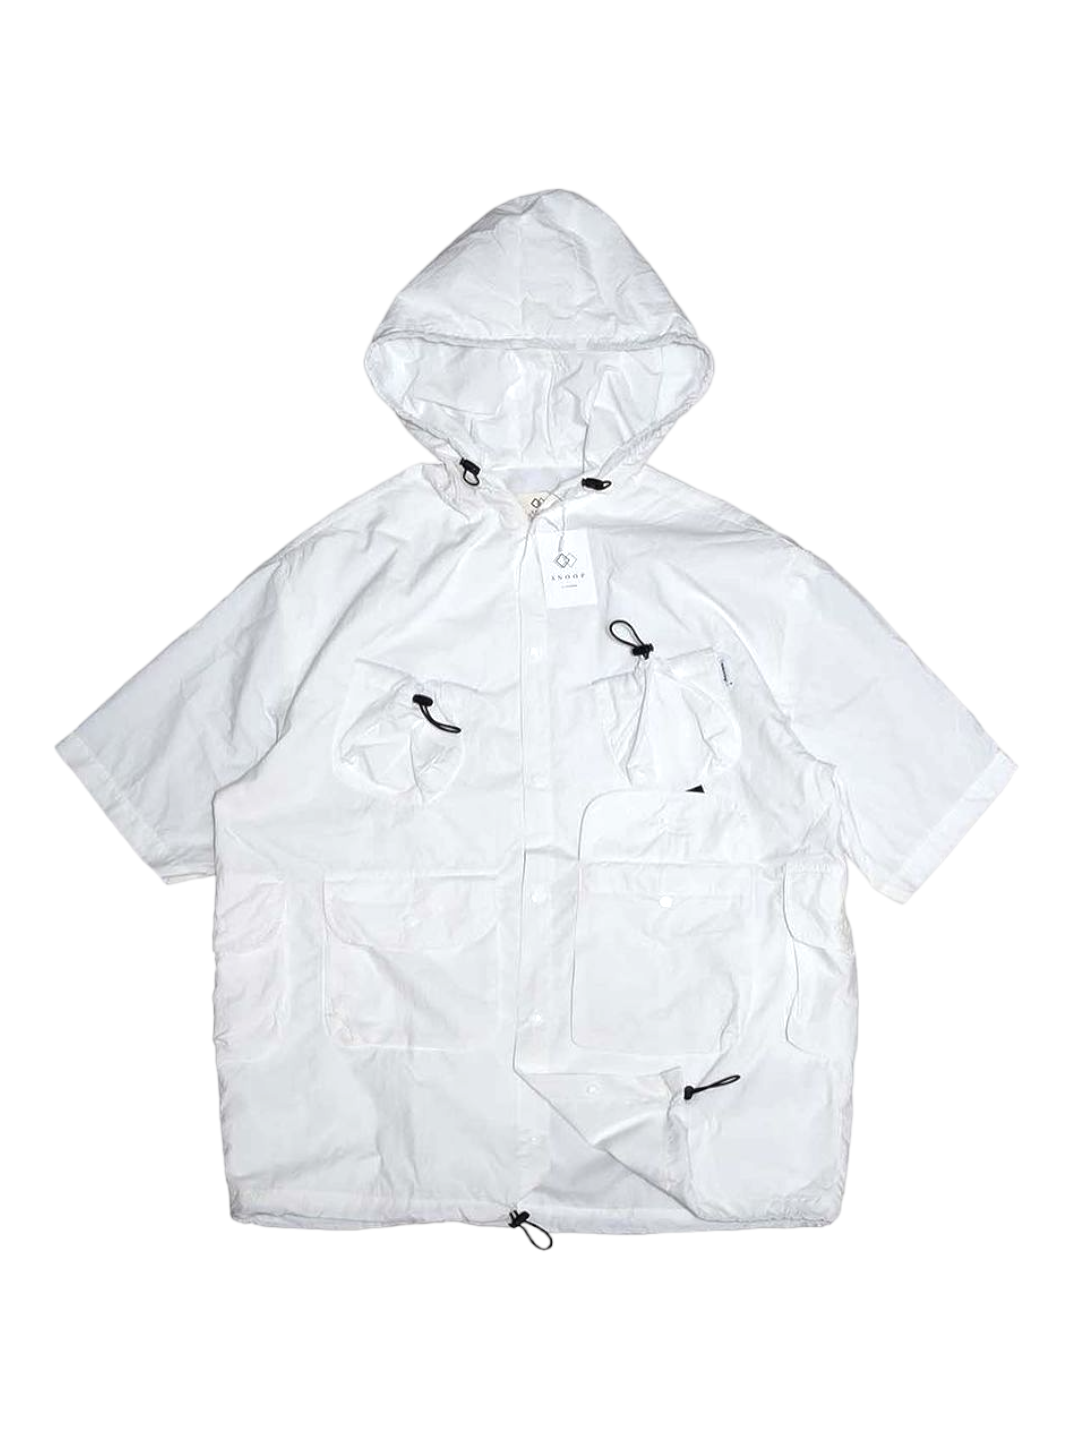 Outdoor Nylon Hoodies 6 pocket Shirt (White)